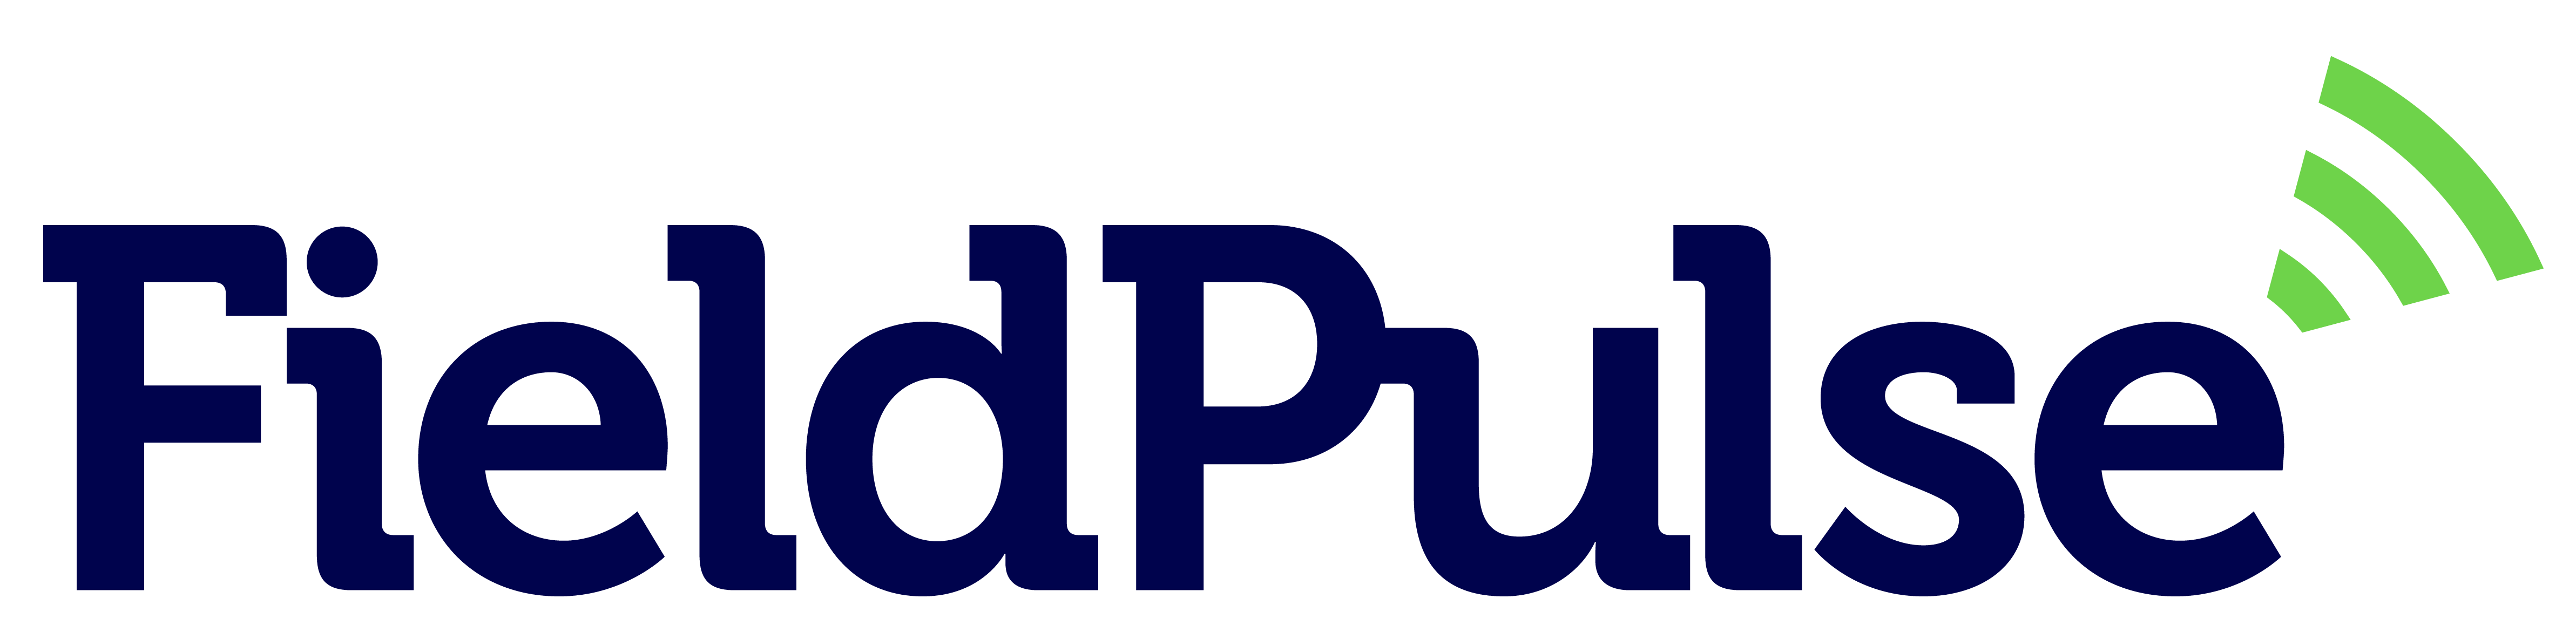 FieldPulse logo.